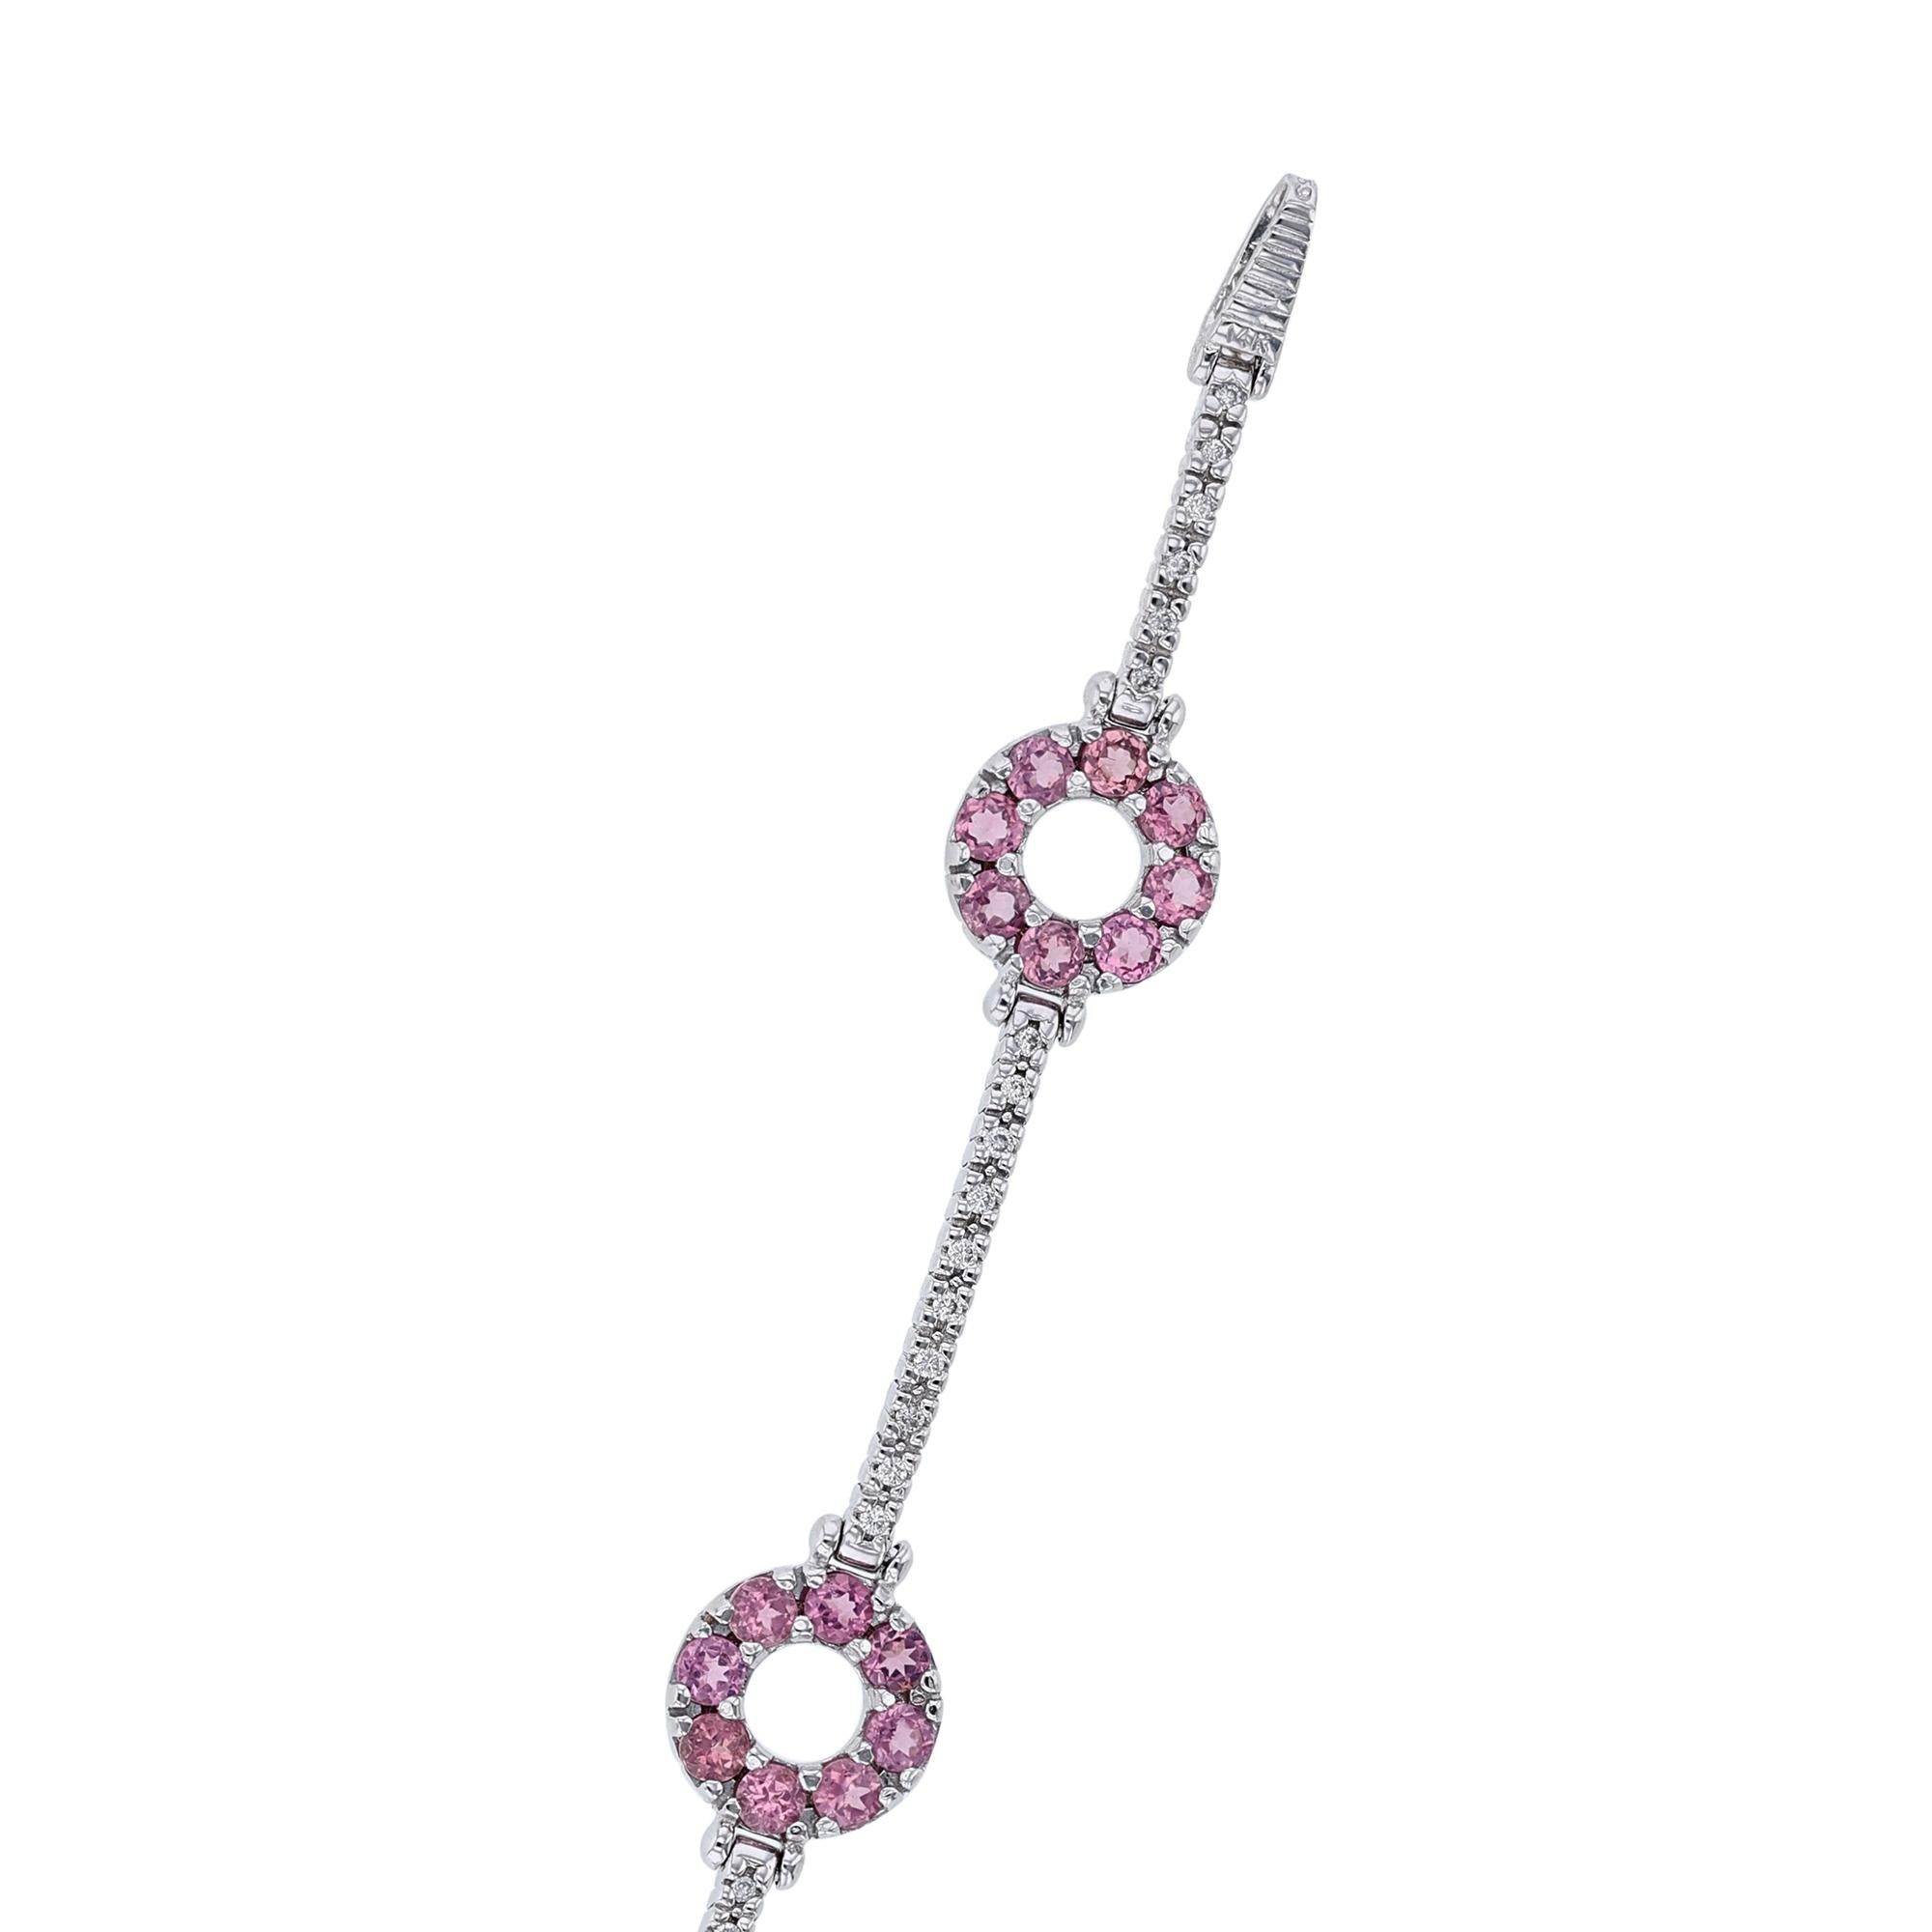 Contemporary 14K White Gold Pink Tourmaline Round Link Diamond Bracelet